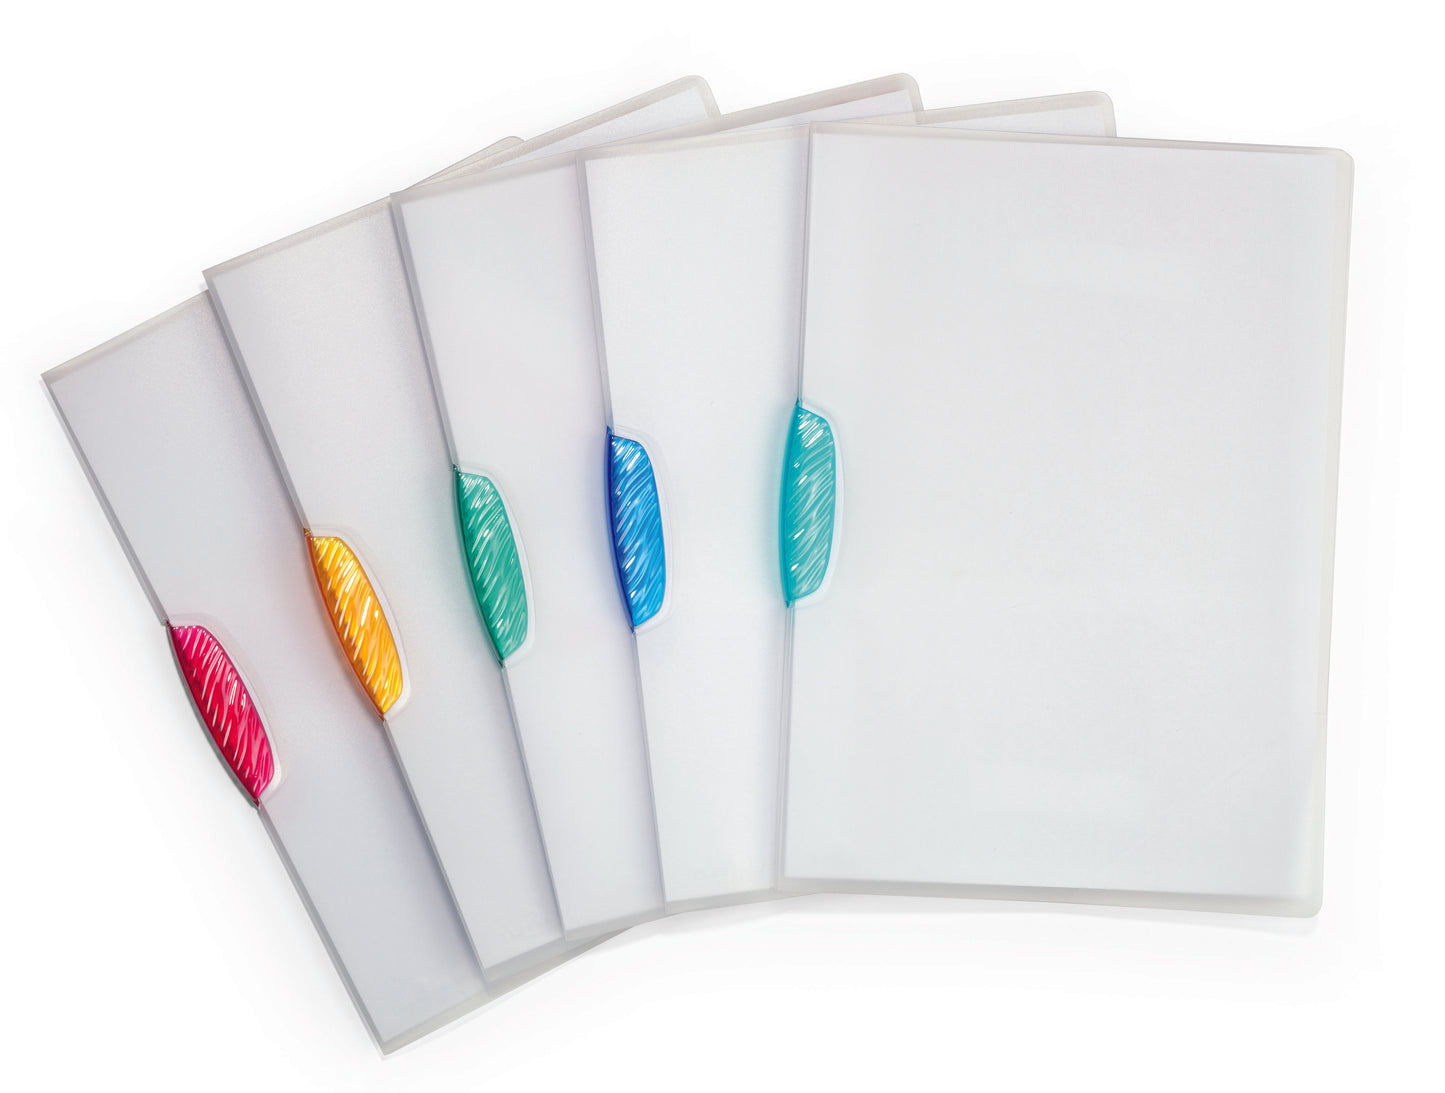 Clip folder SWINGCLIP® 30 A4 transparent Per Piece